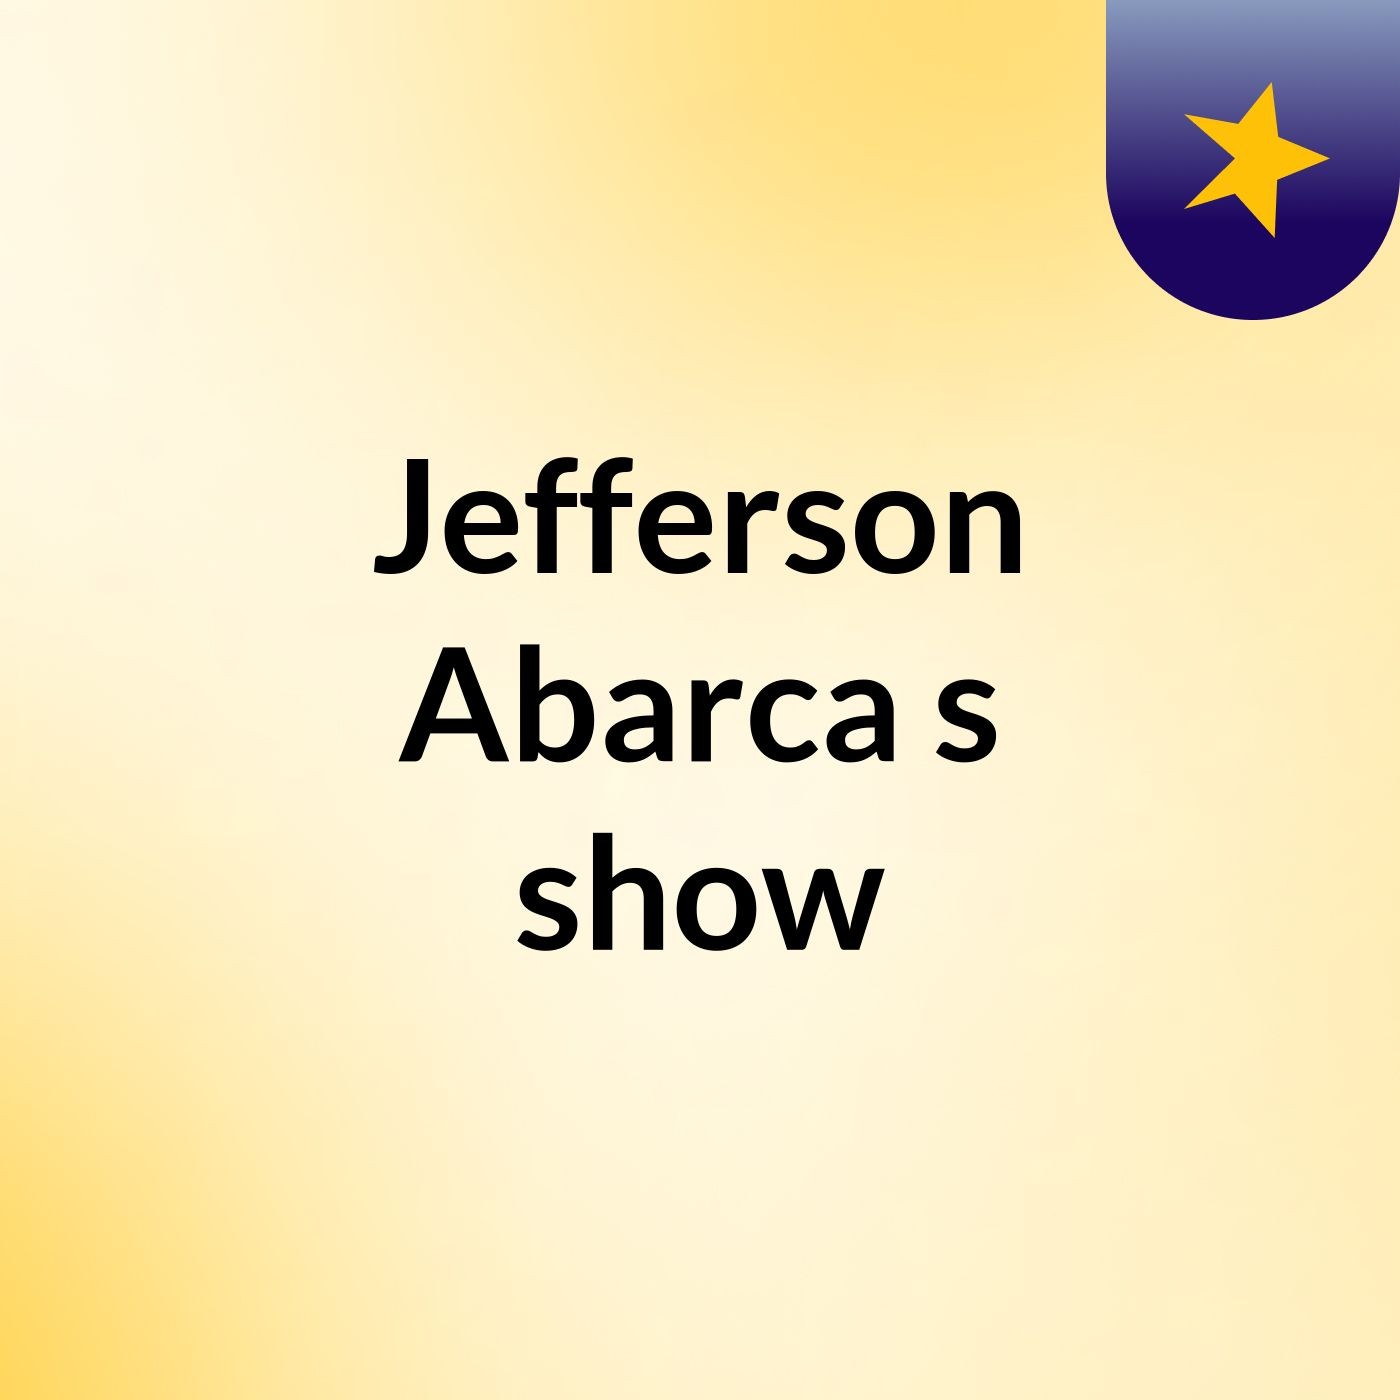 Jefferson Abarca's show